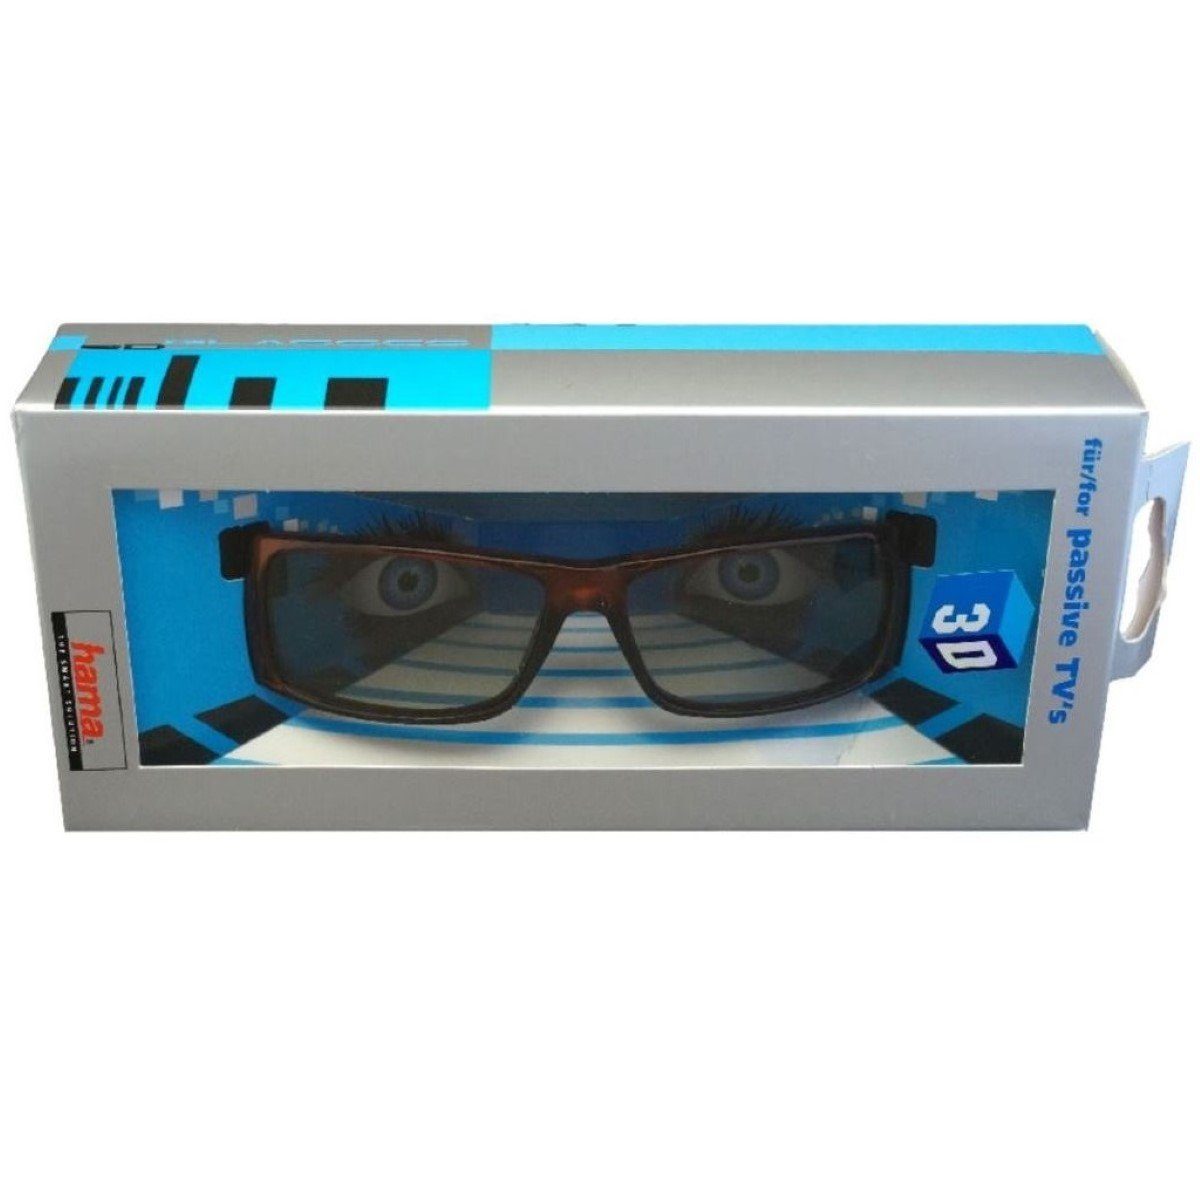 3D-TV 3D-Technik Universell Passiv etc. Passiv Unisex Brille 3D-Brille Hama Braun, Kino 3D Beamer Polfilterbrille für Polarisation,